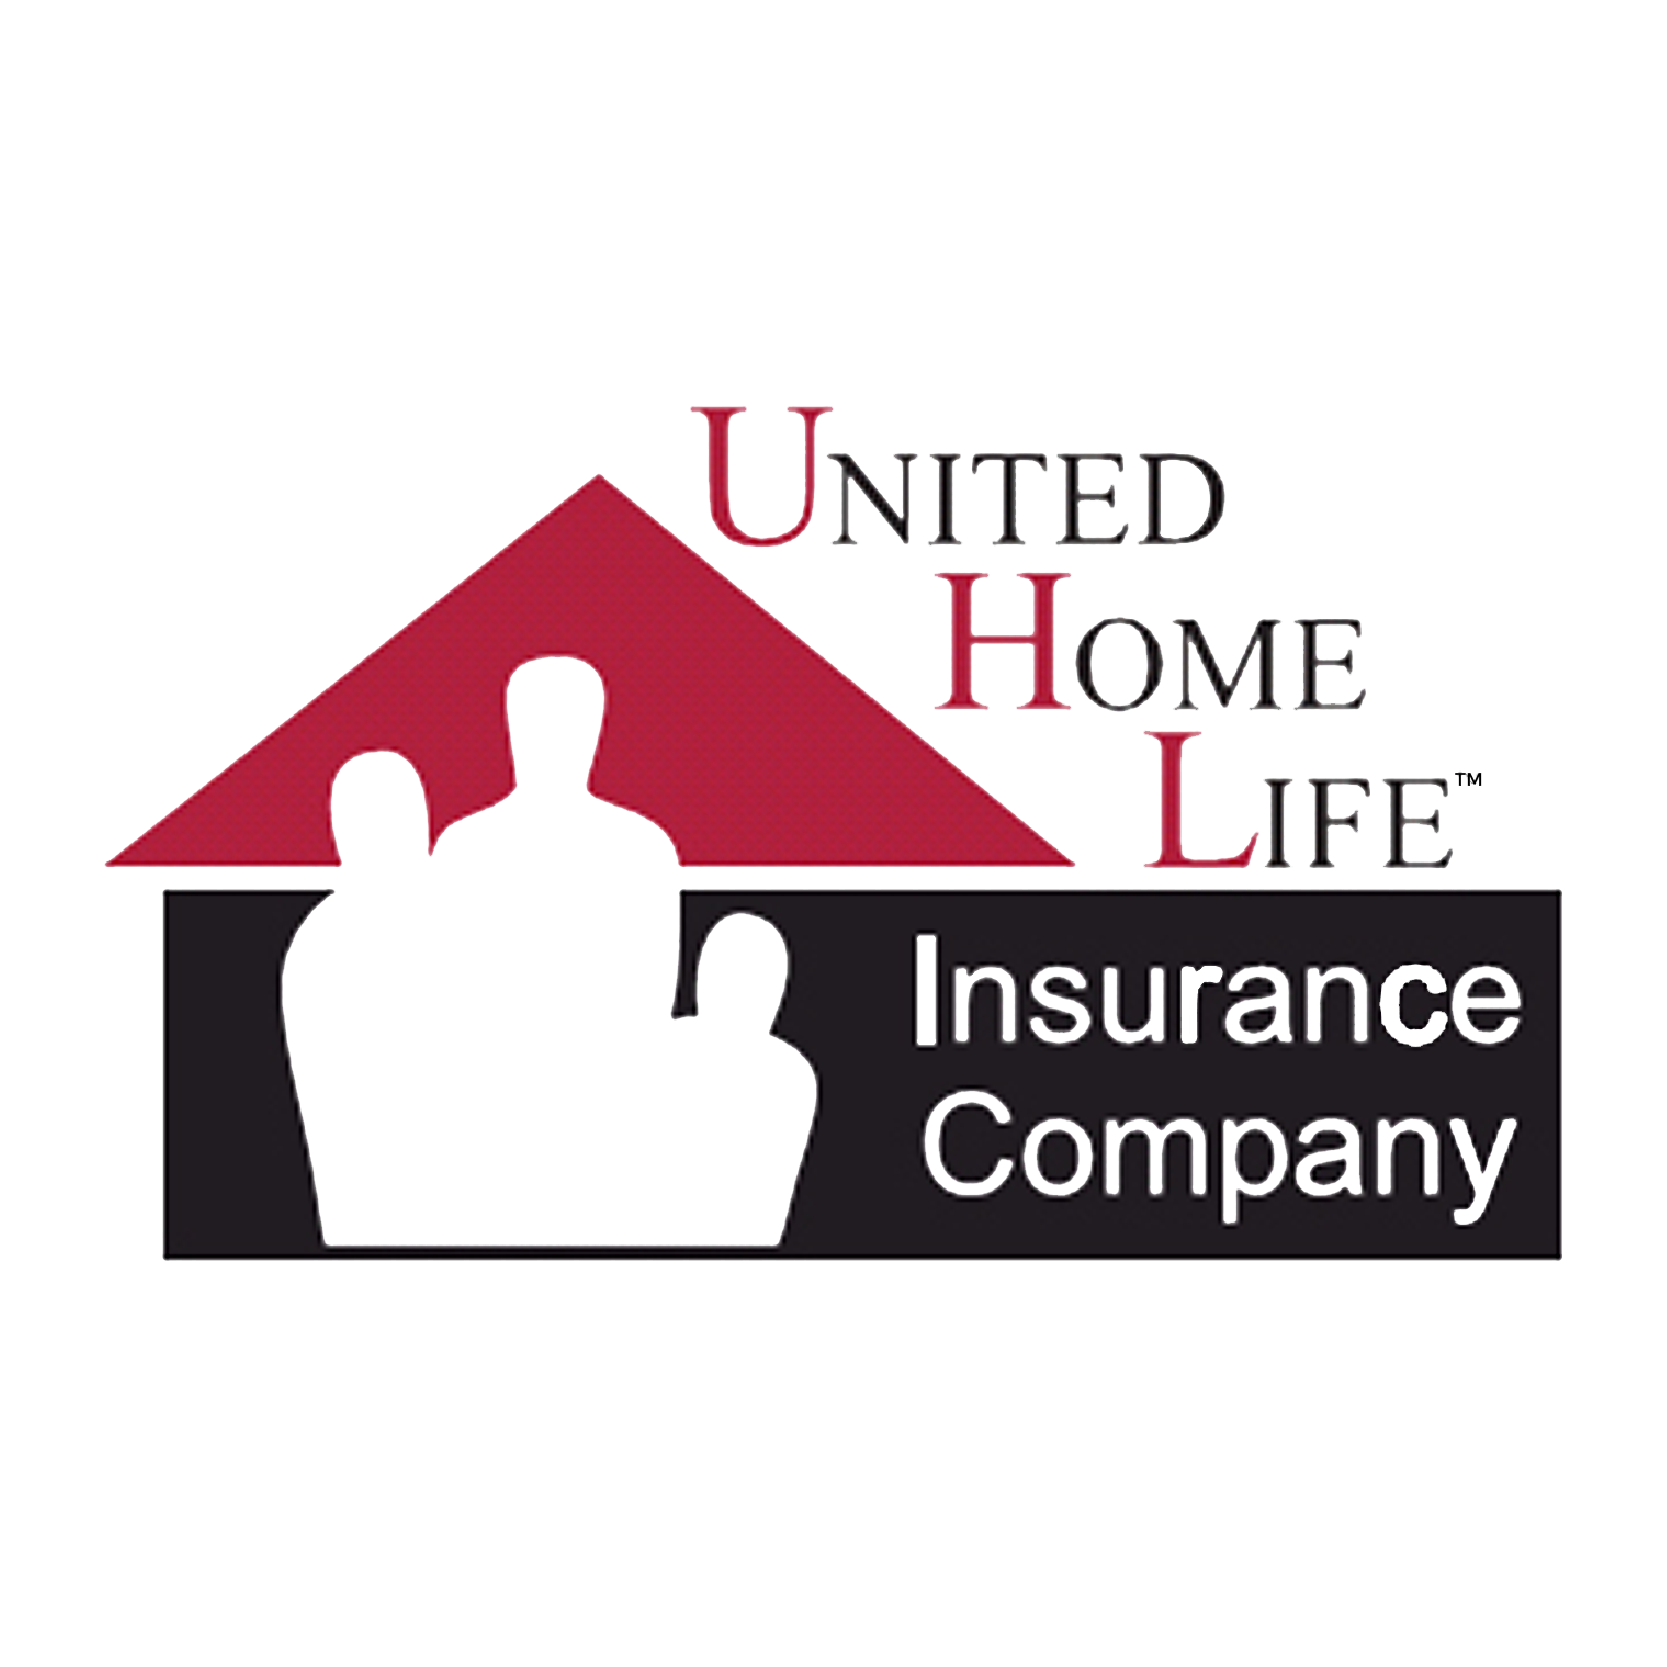 United Home Life